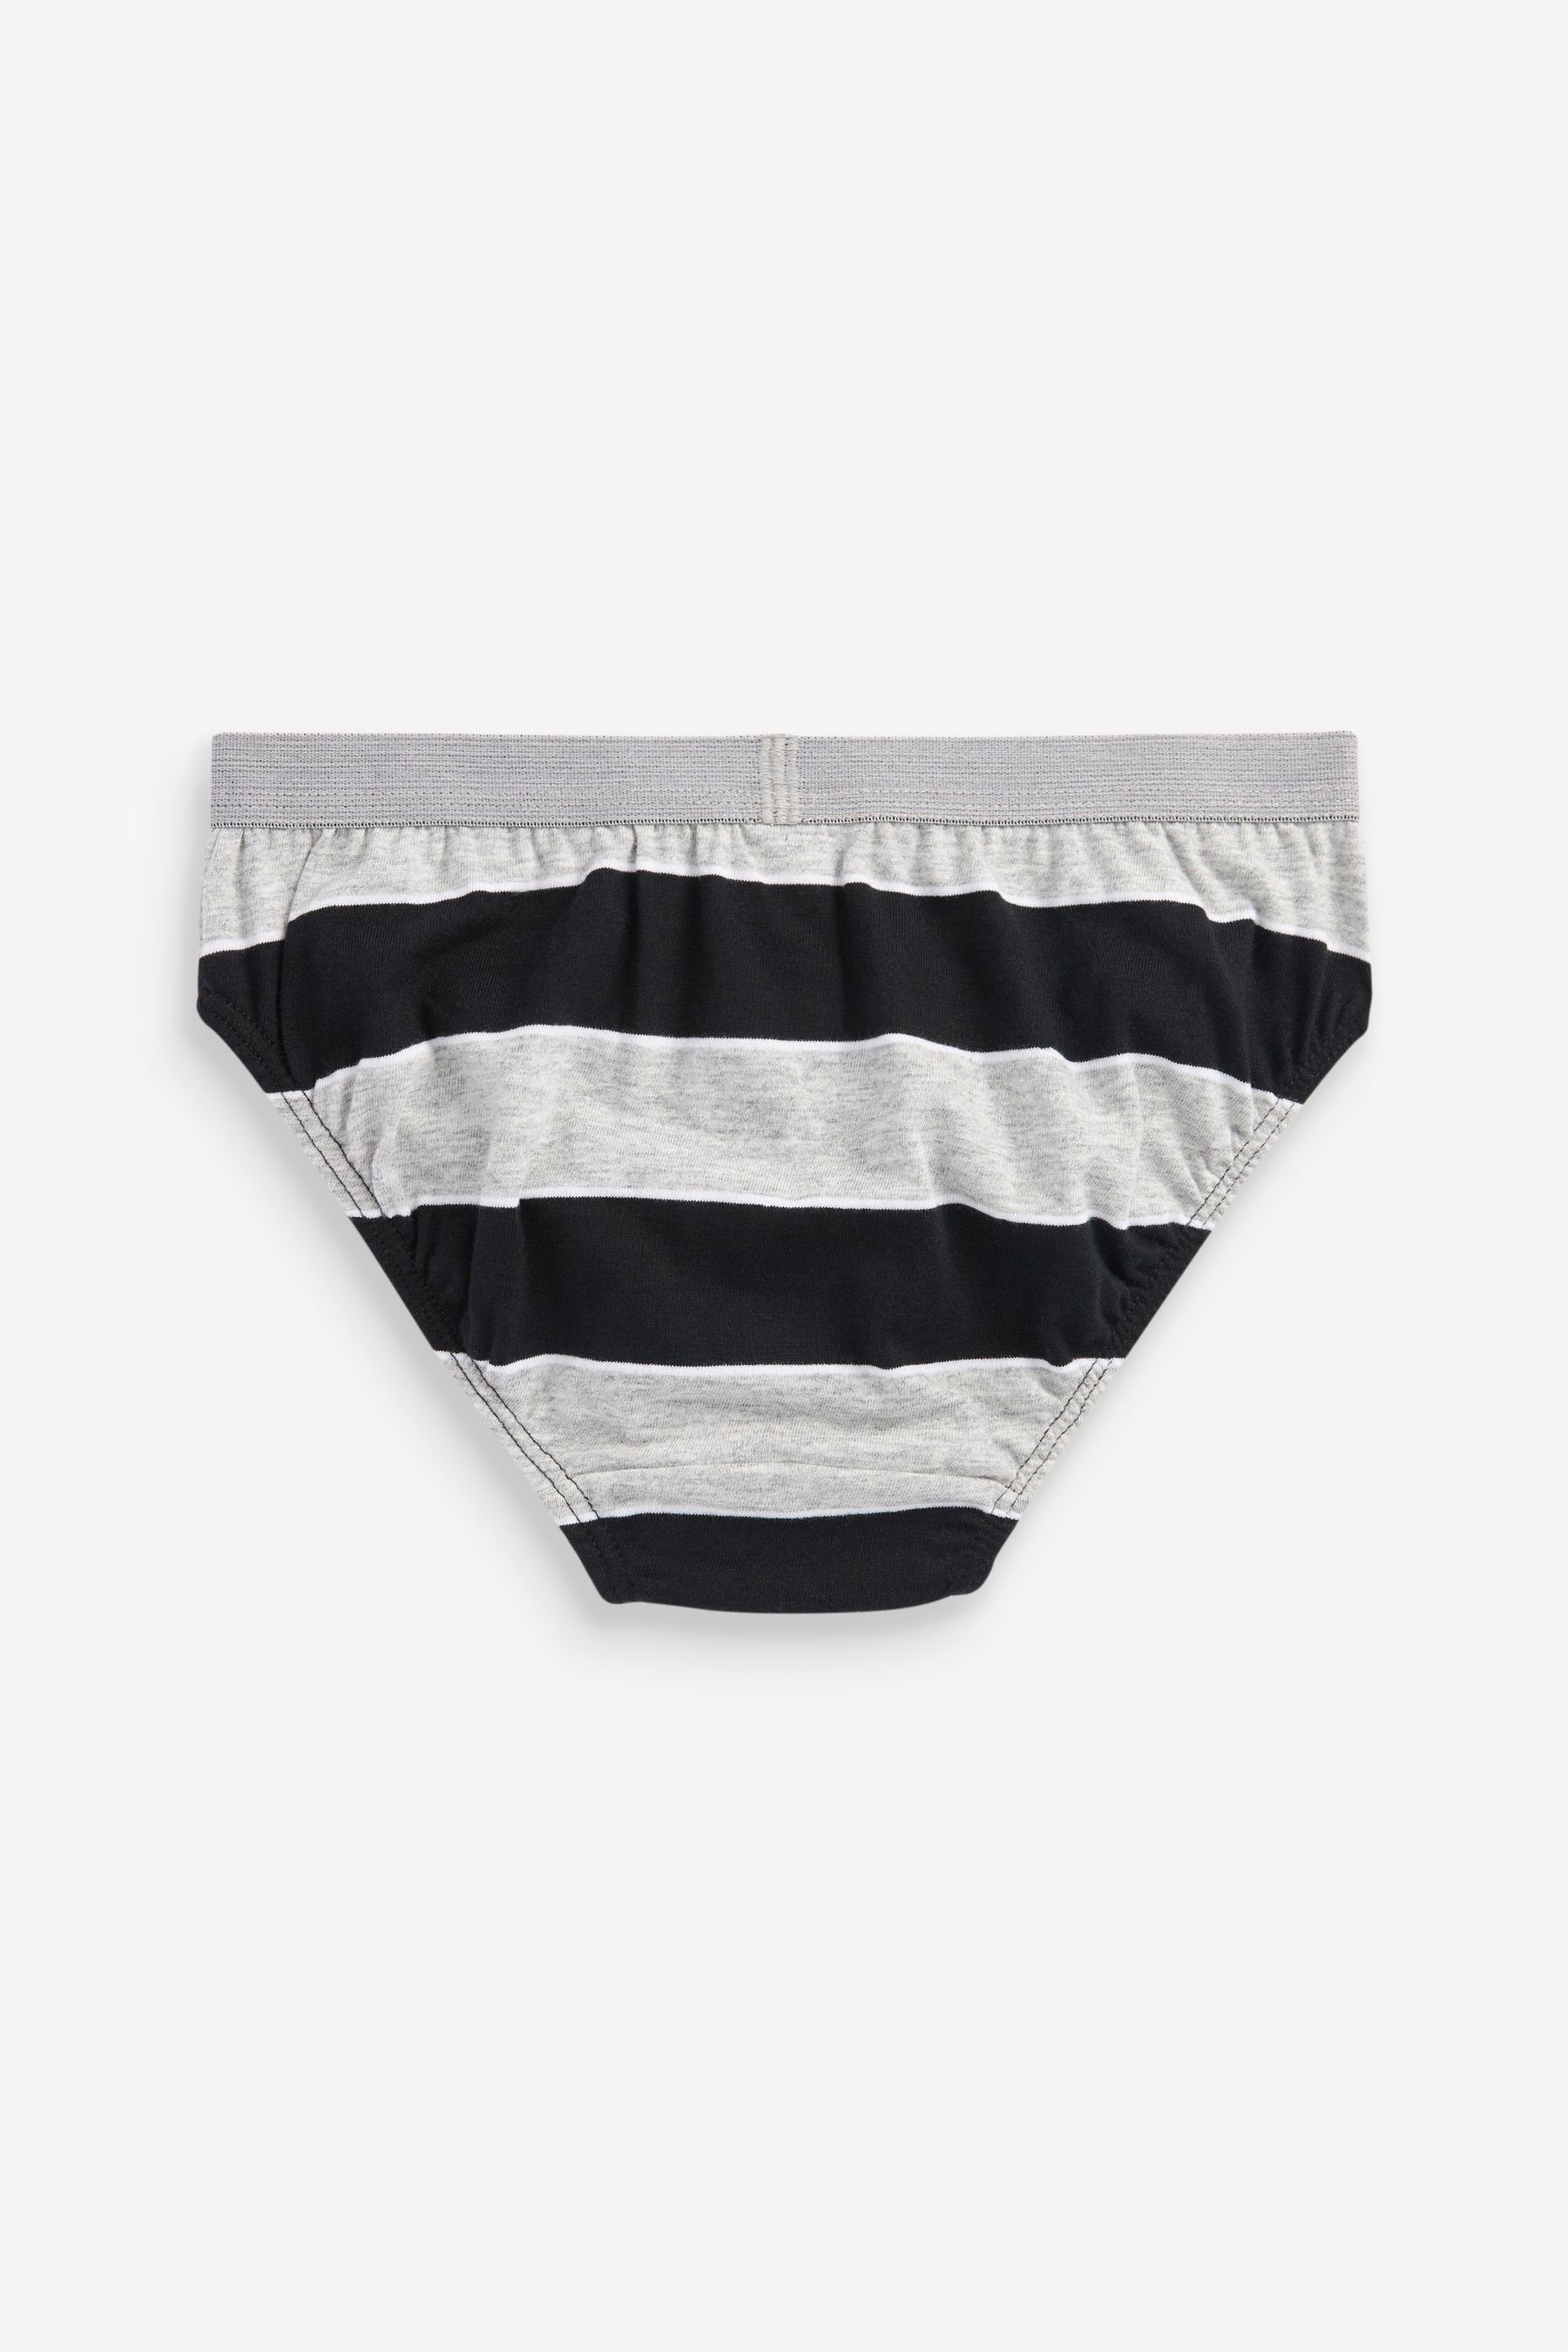 Next Slip Unterhosen Stripe Black/White/Grey im (5-St) 5er-Pack